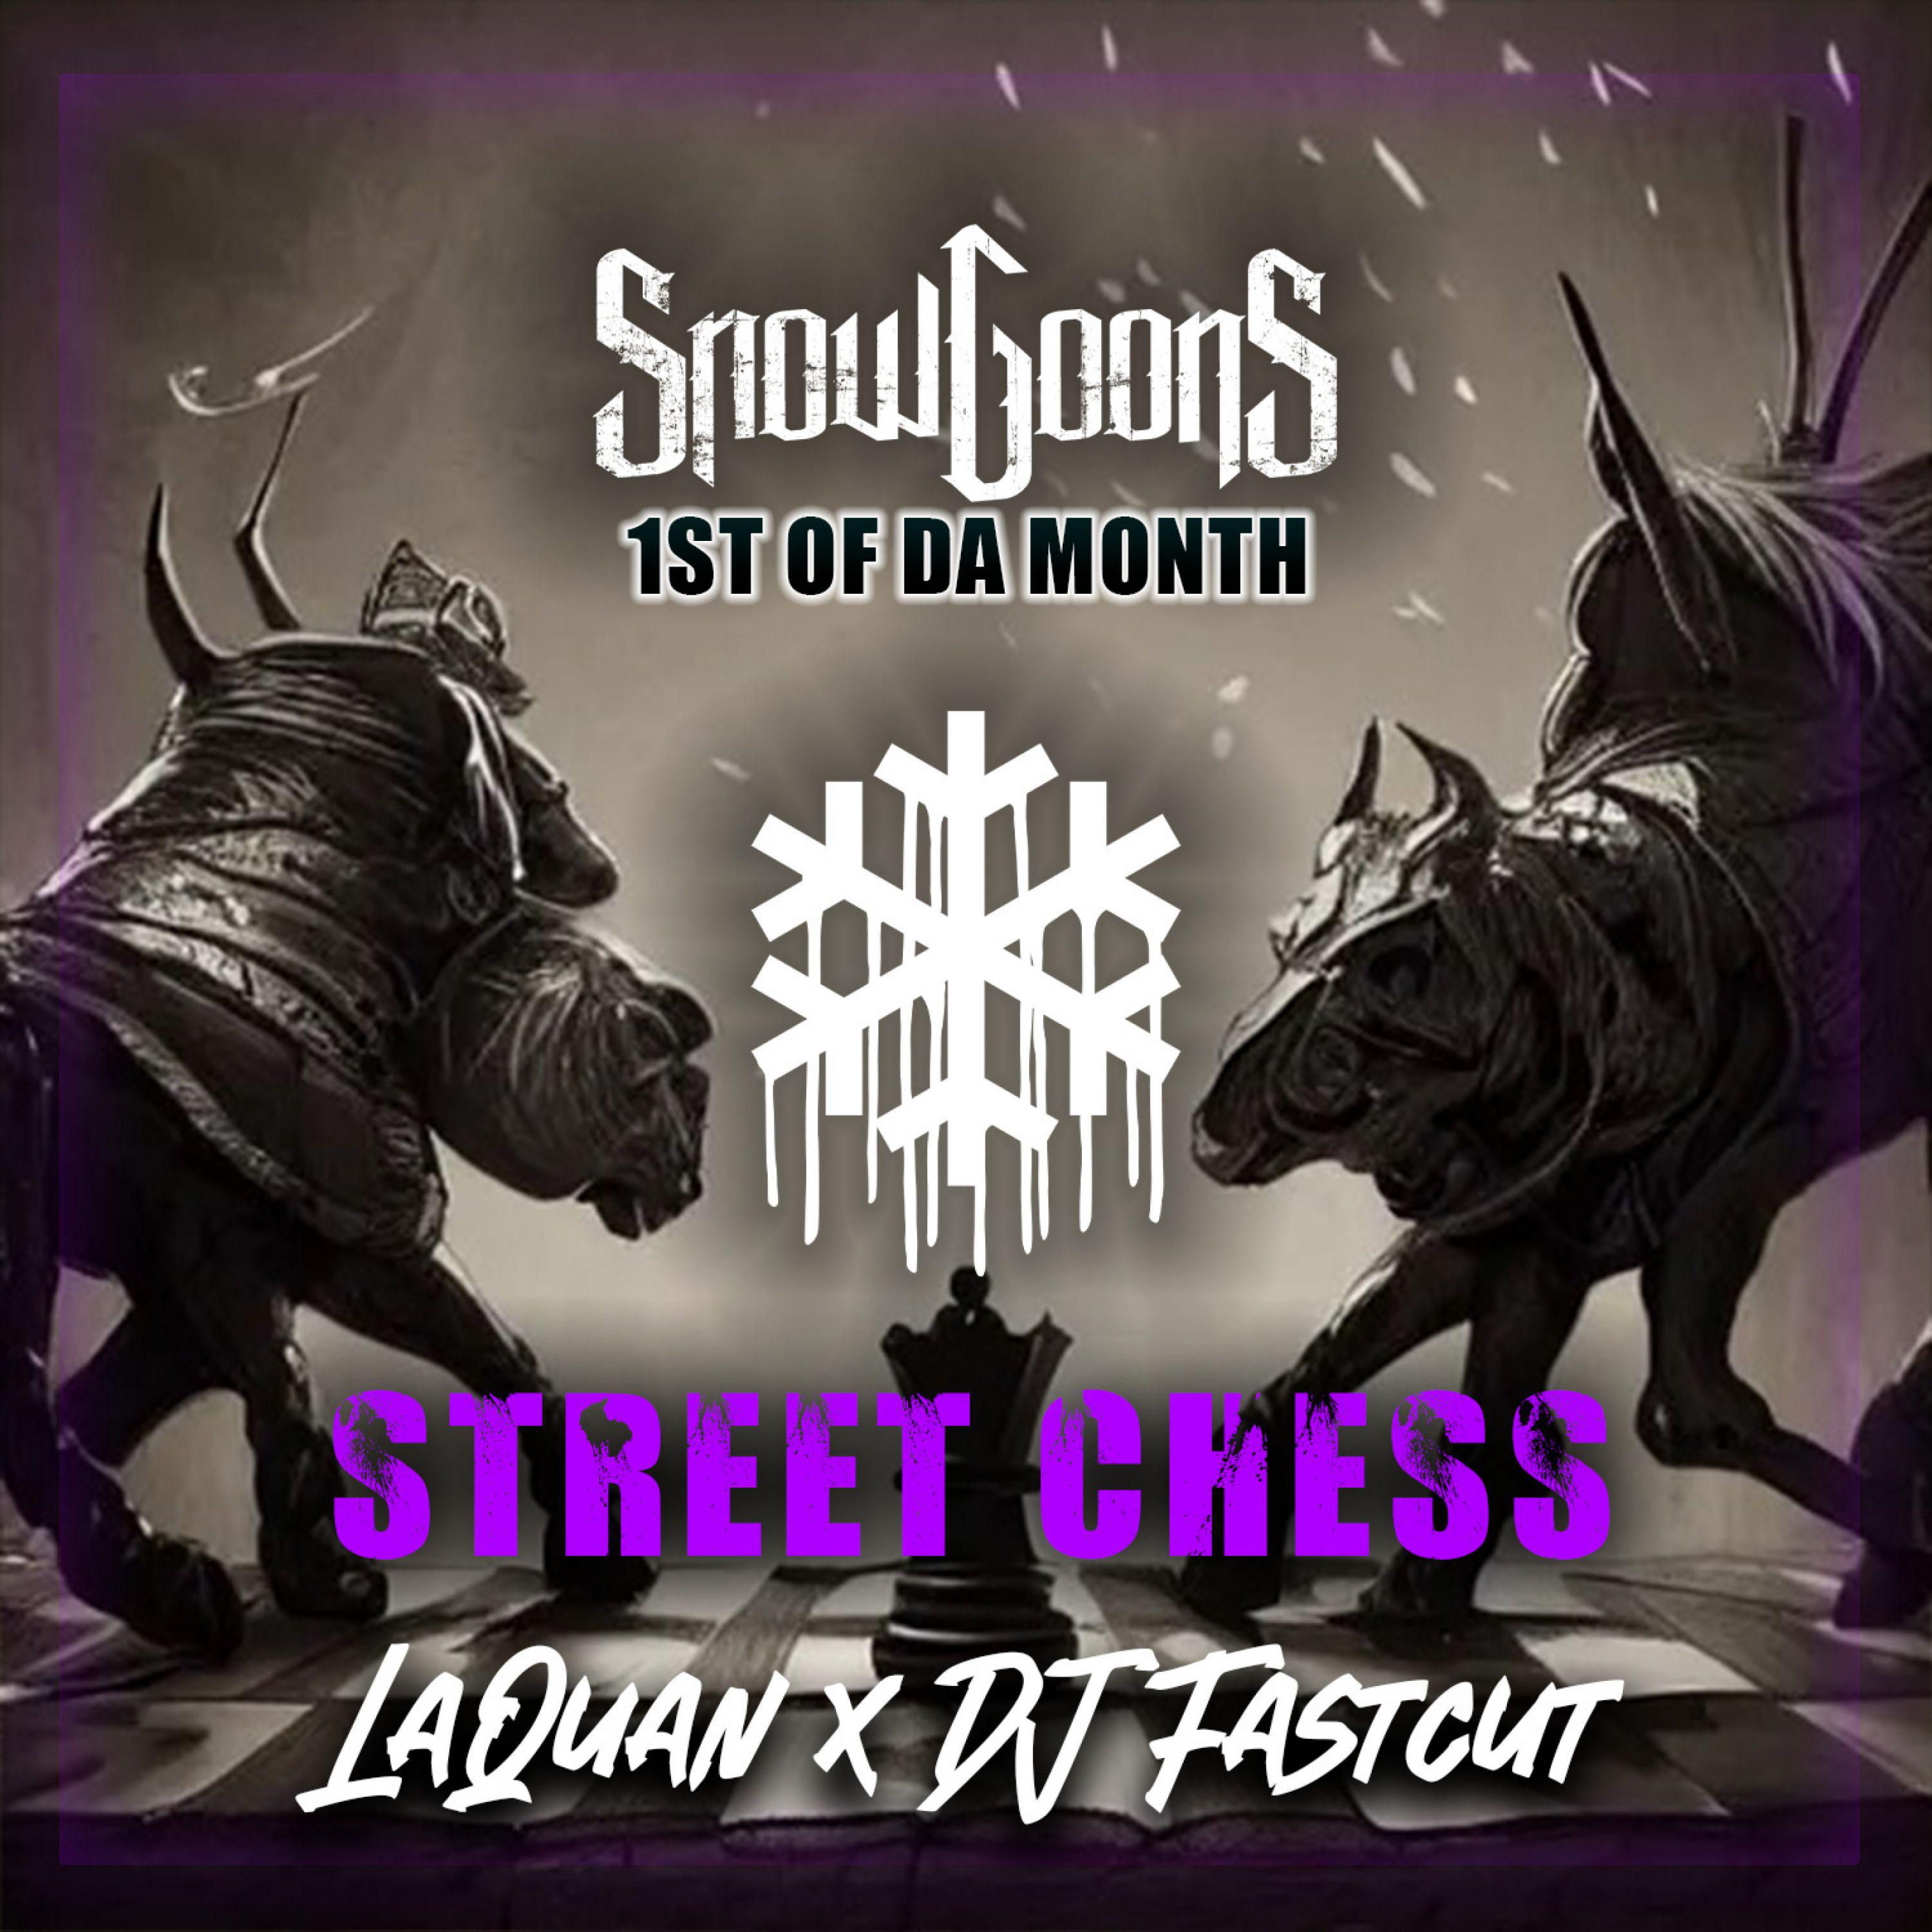 Snowgoons - Street Chess